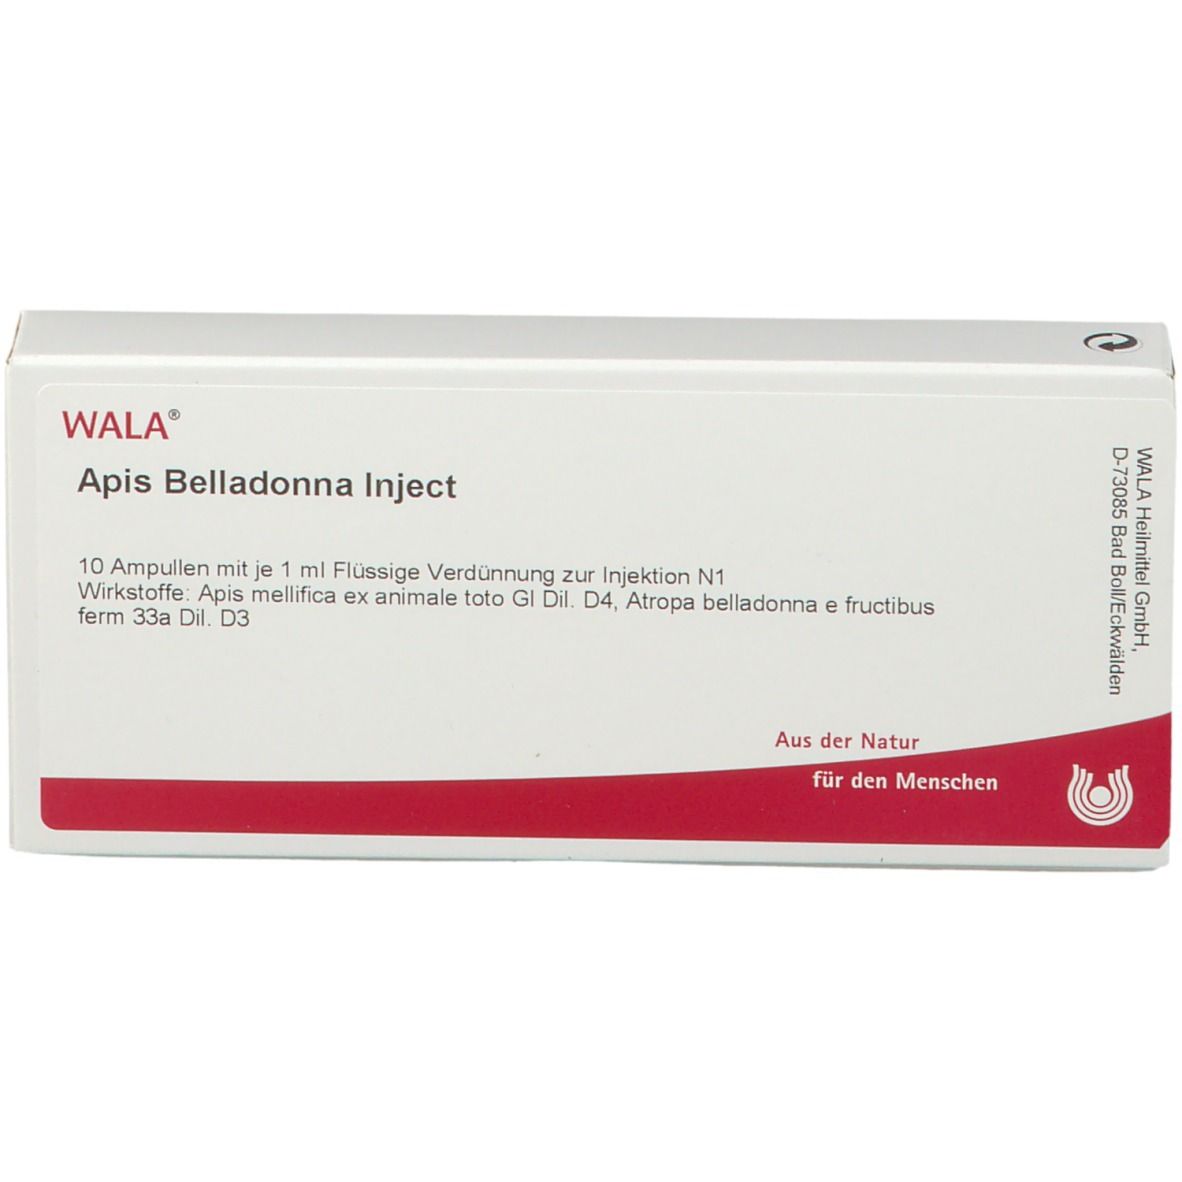 WALA® Apis Belladonna Inject Amp.